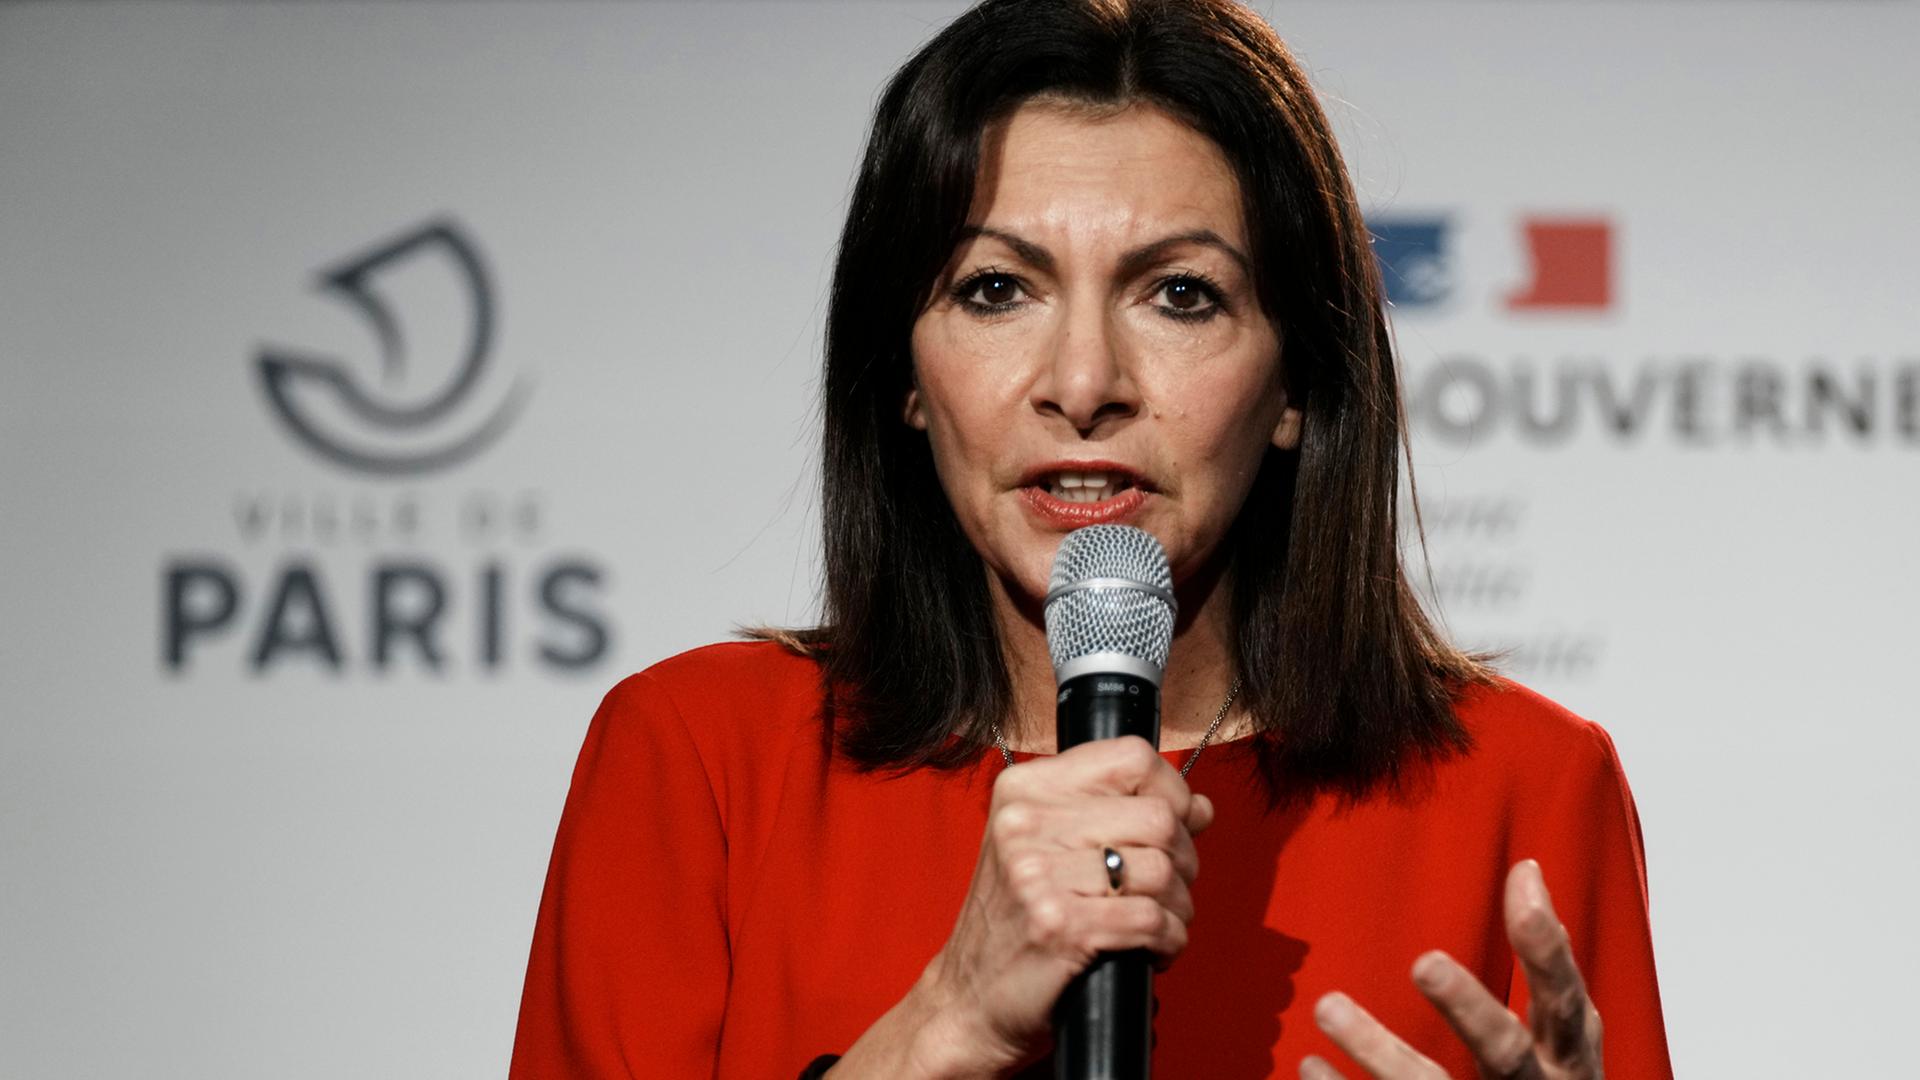 Debatte über Olympia 2024 - Pariser Bürgermeisterin Hidalgo gegen Zulassung russischer Athleten